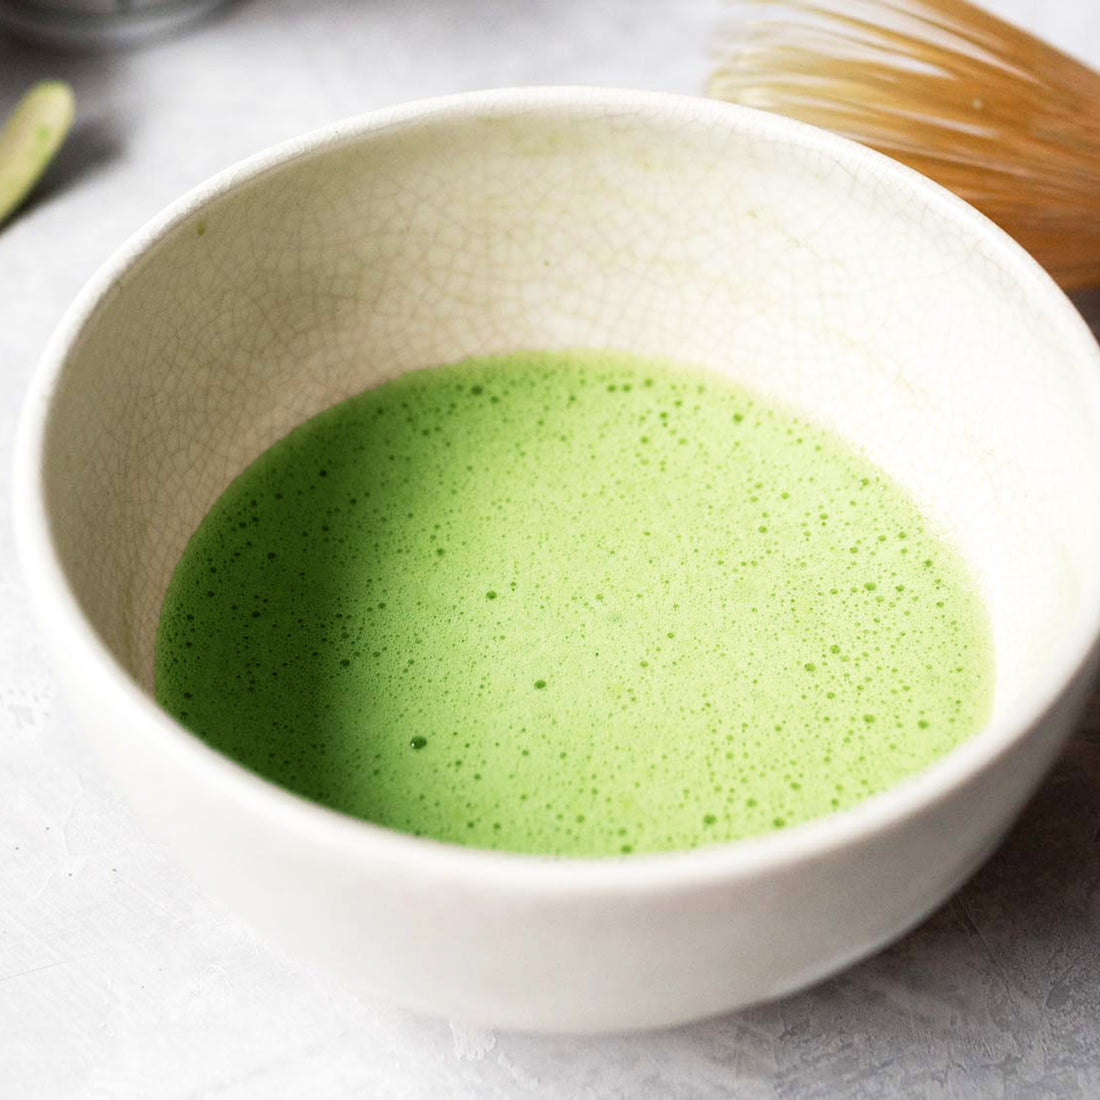 The Benefits of Matcha Green Tea